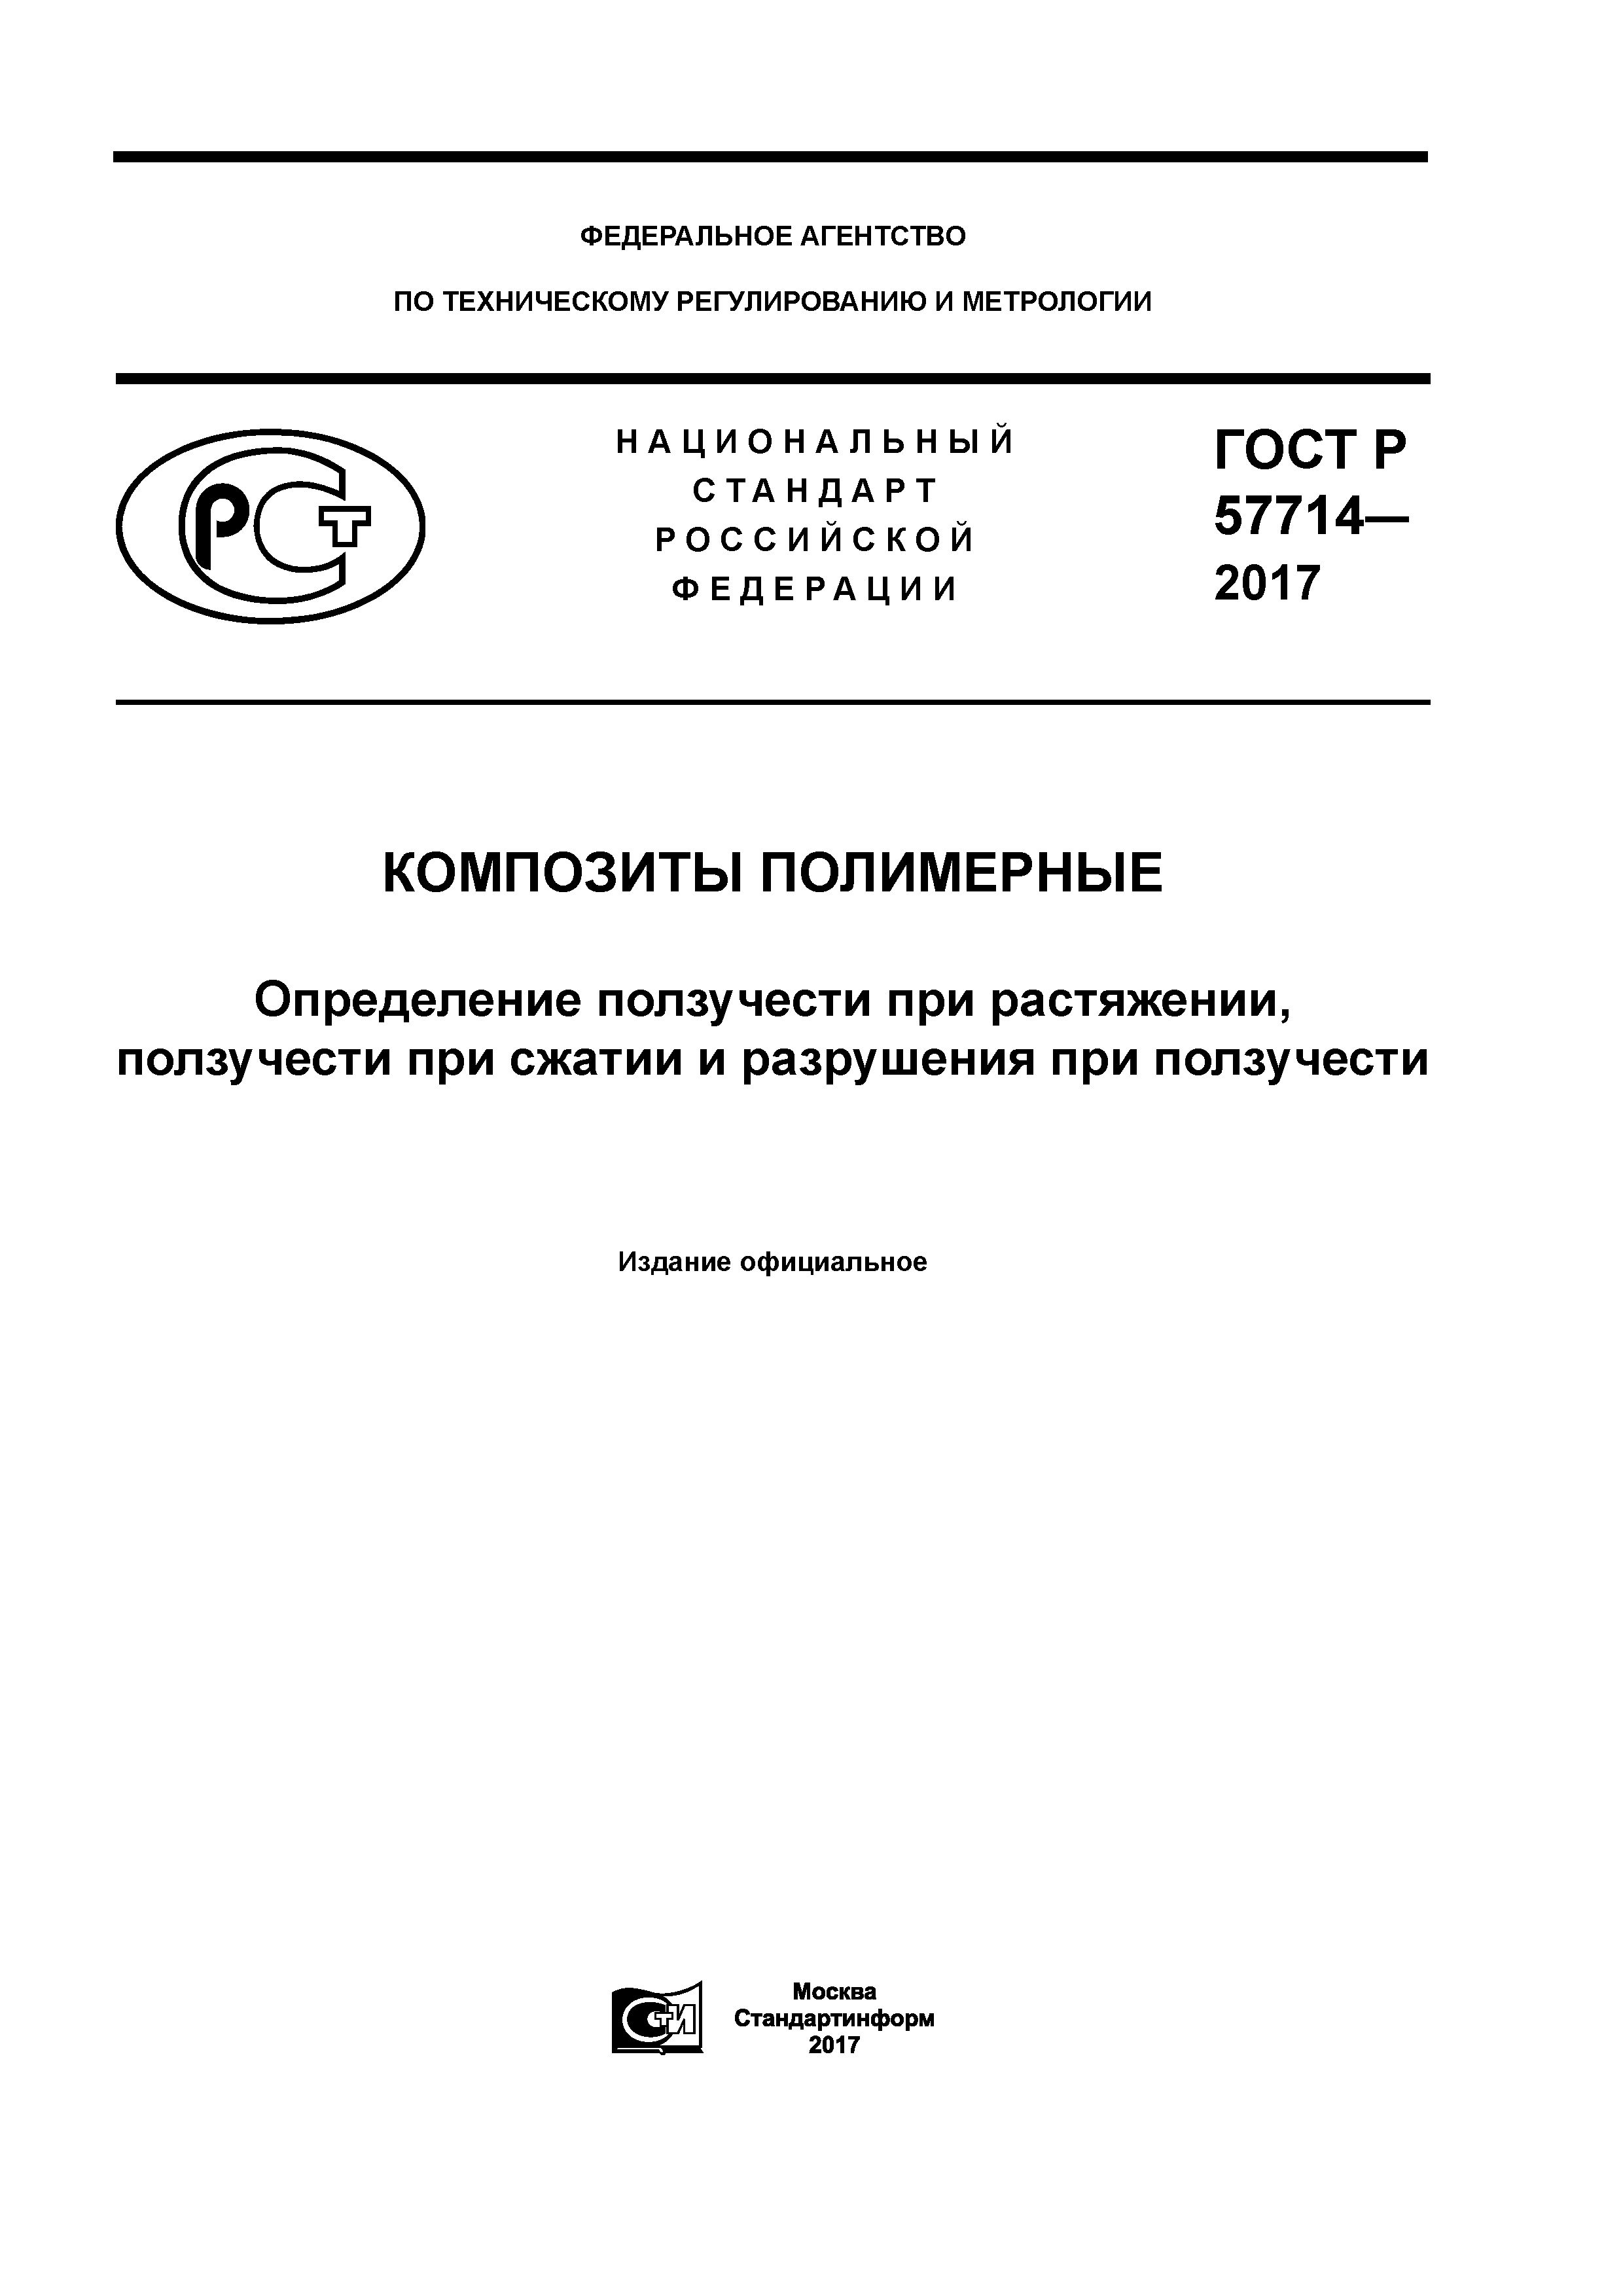 ГОСТ Р 57714-2017